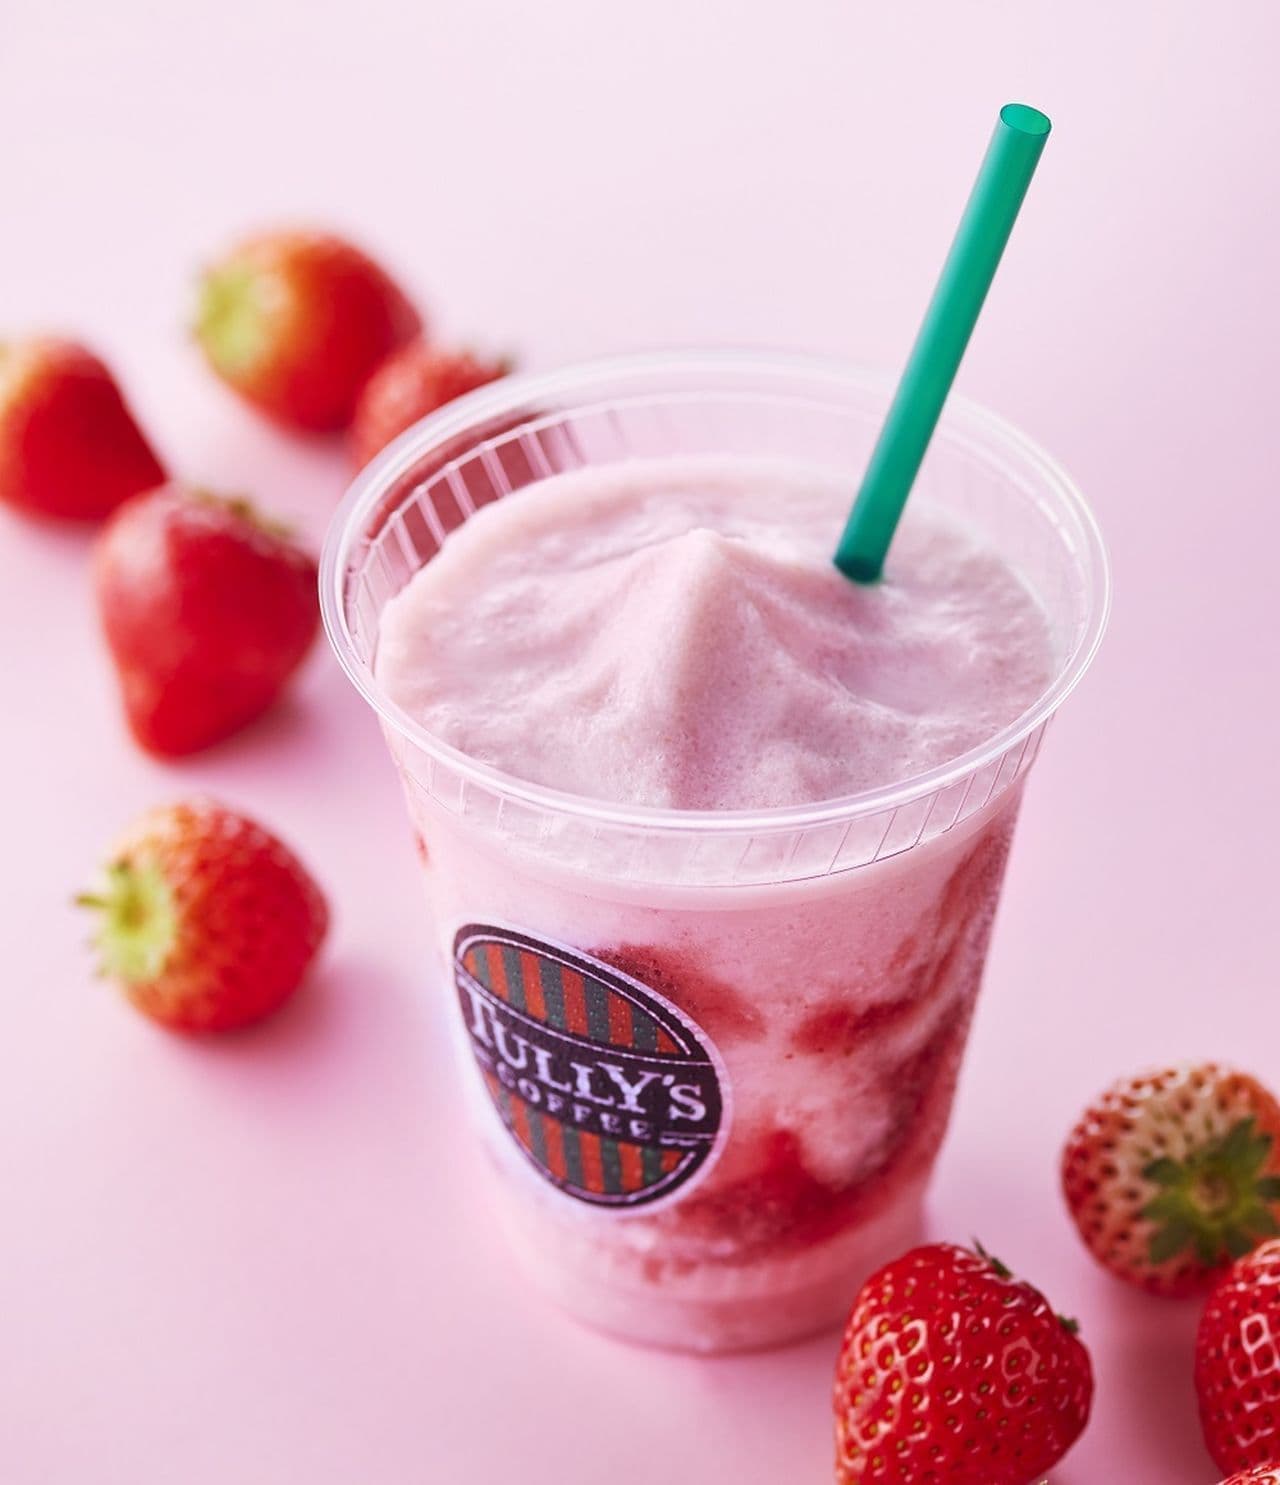 Tully's Coffee "Strawberry Yogurt Sourdough